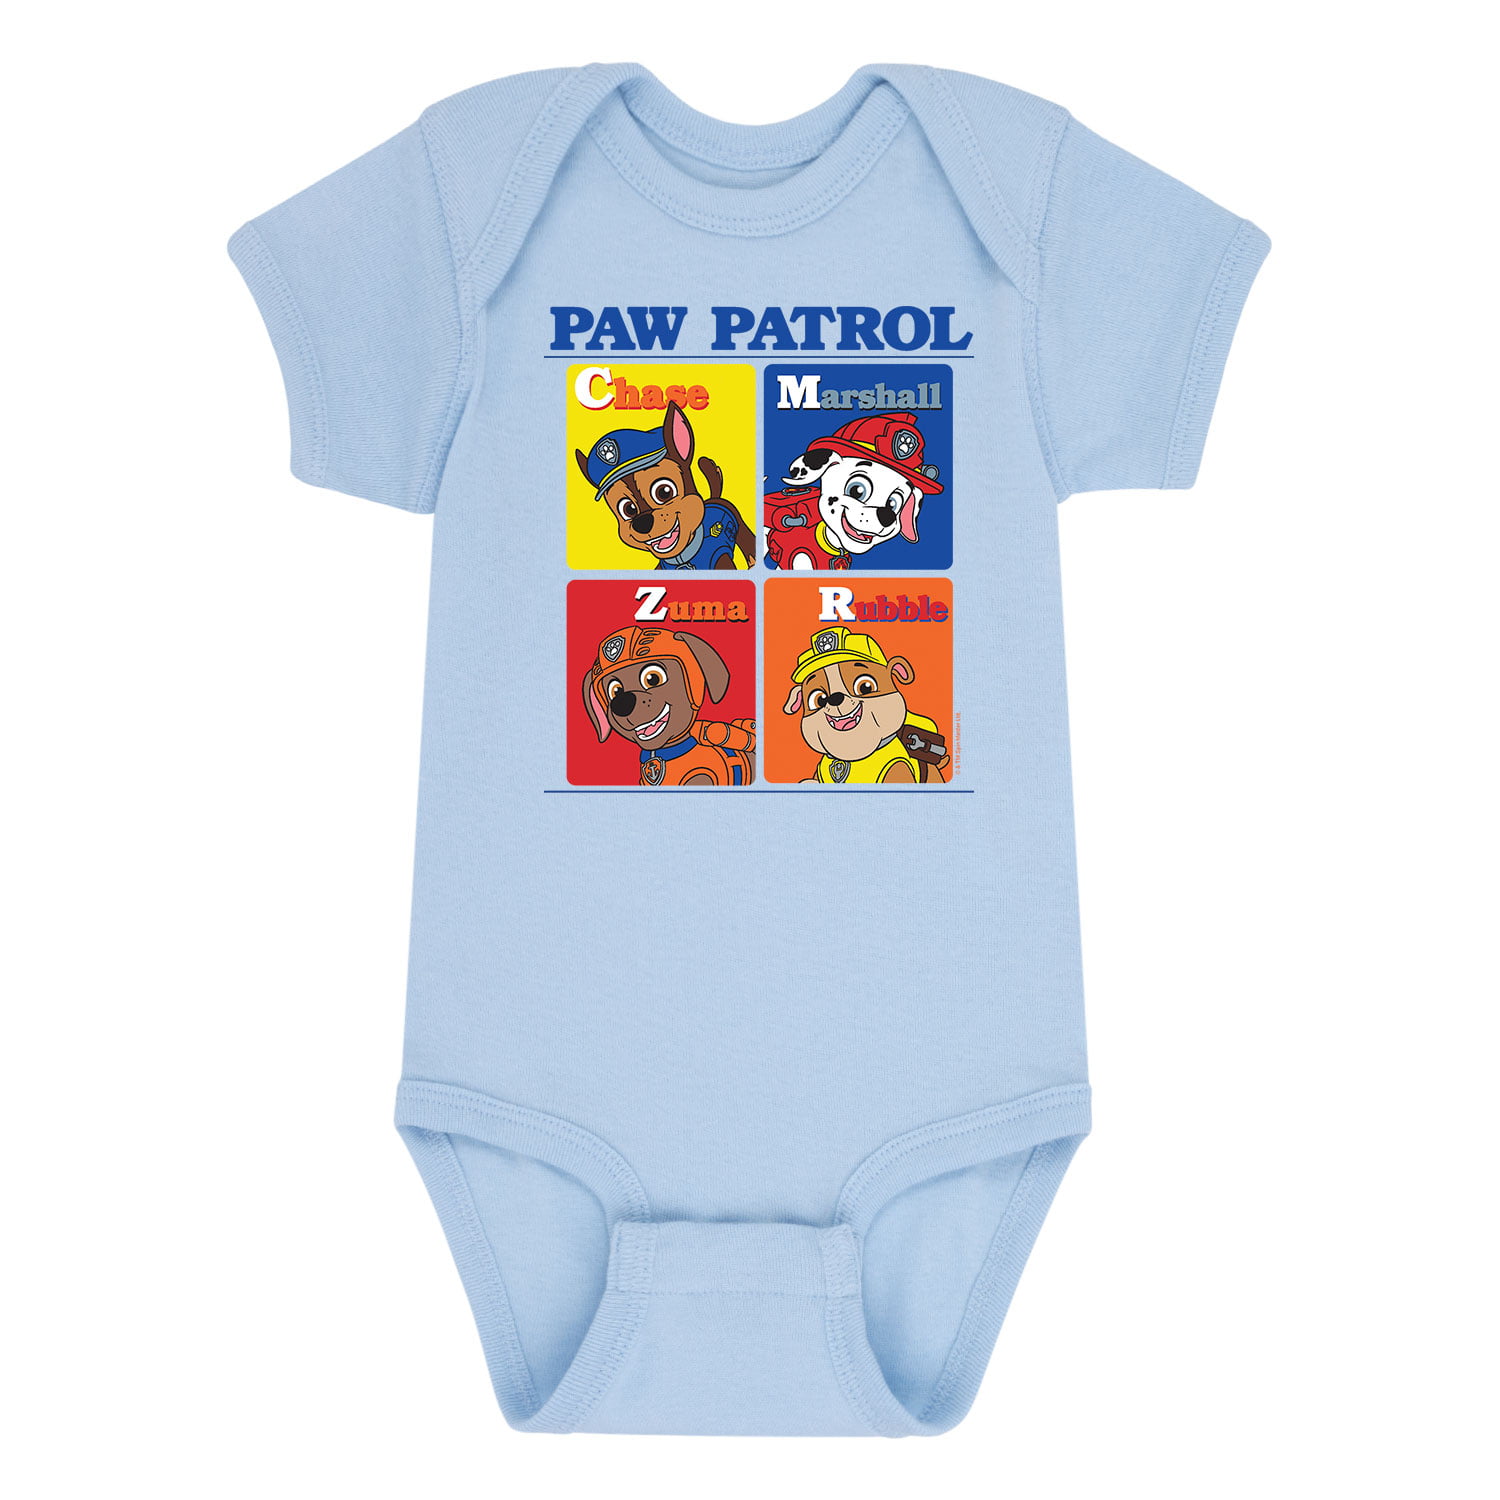 NEW Baby Paw Patrol One Piece Sizes 0 thru 12M Stripe Blue Rubble Marshall Chase